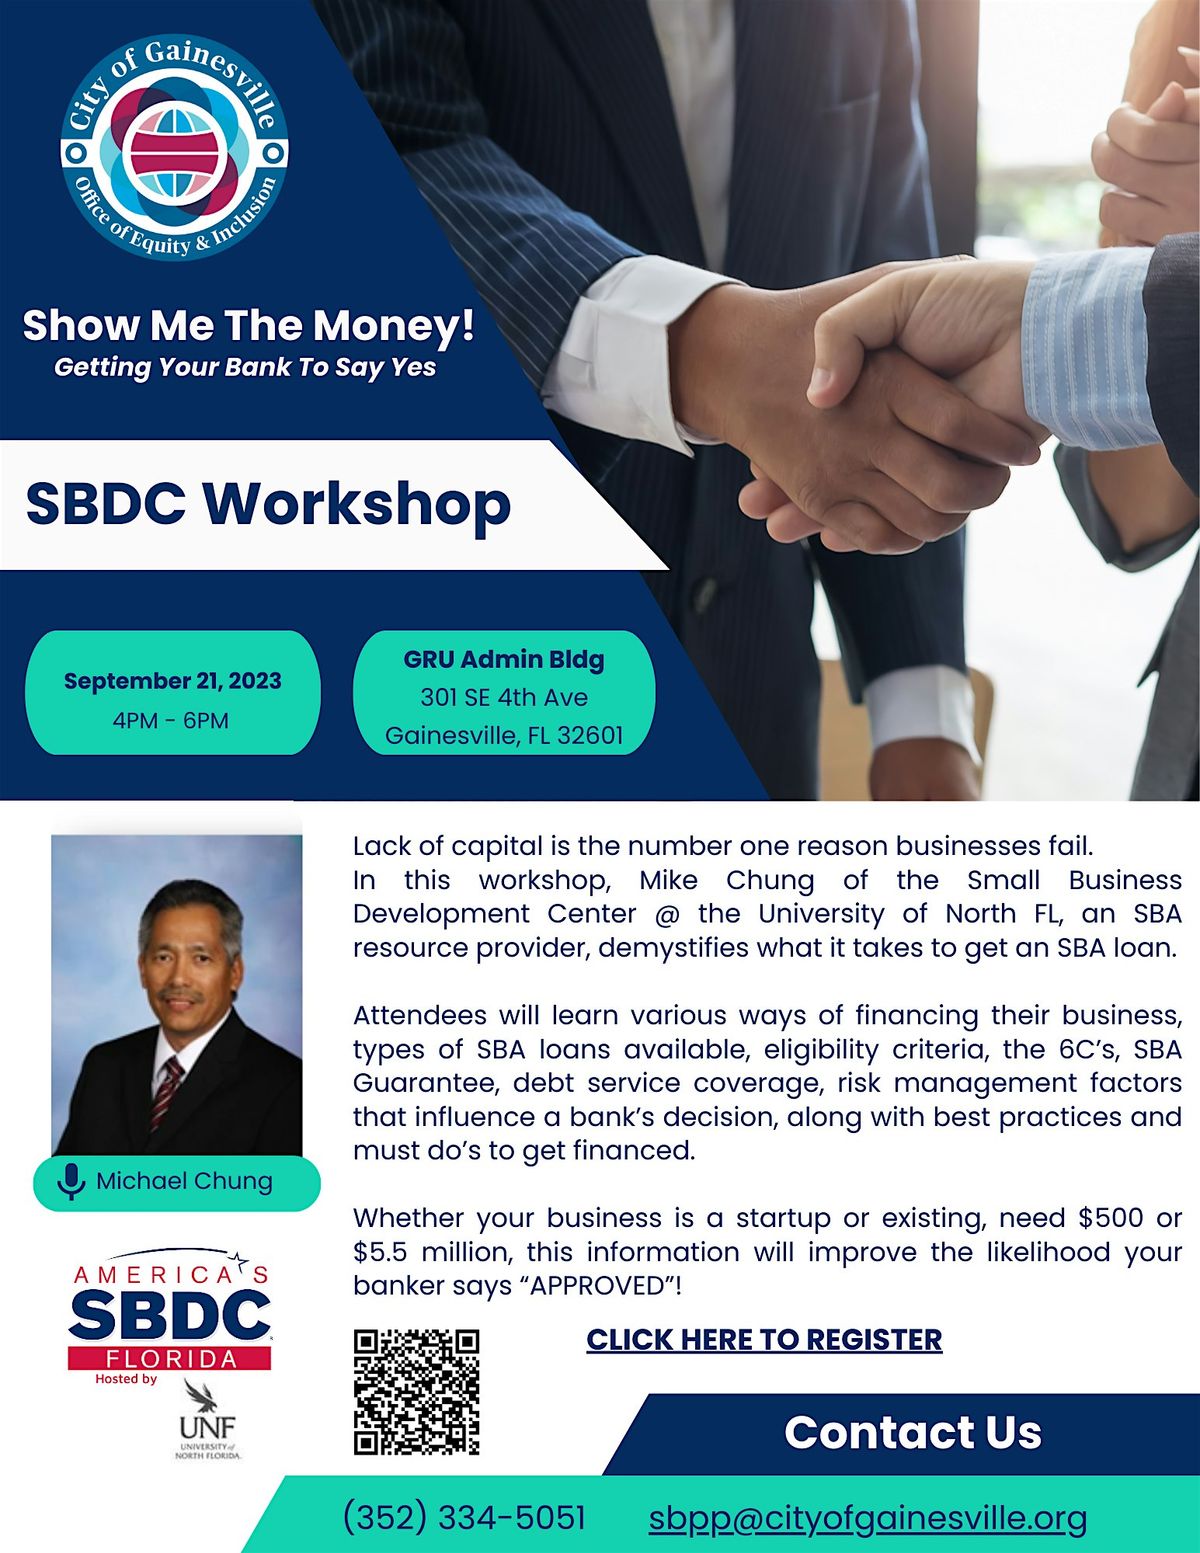 Show Me the Money! SBDC Workshop